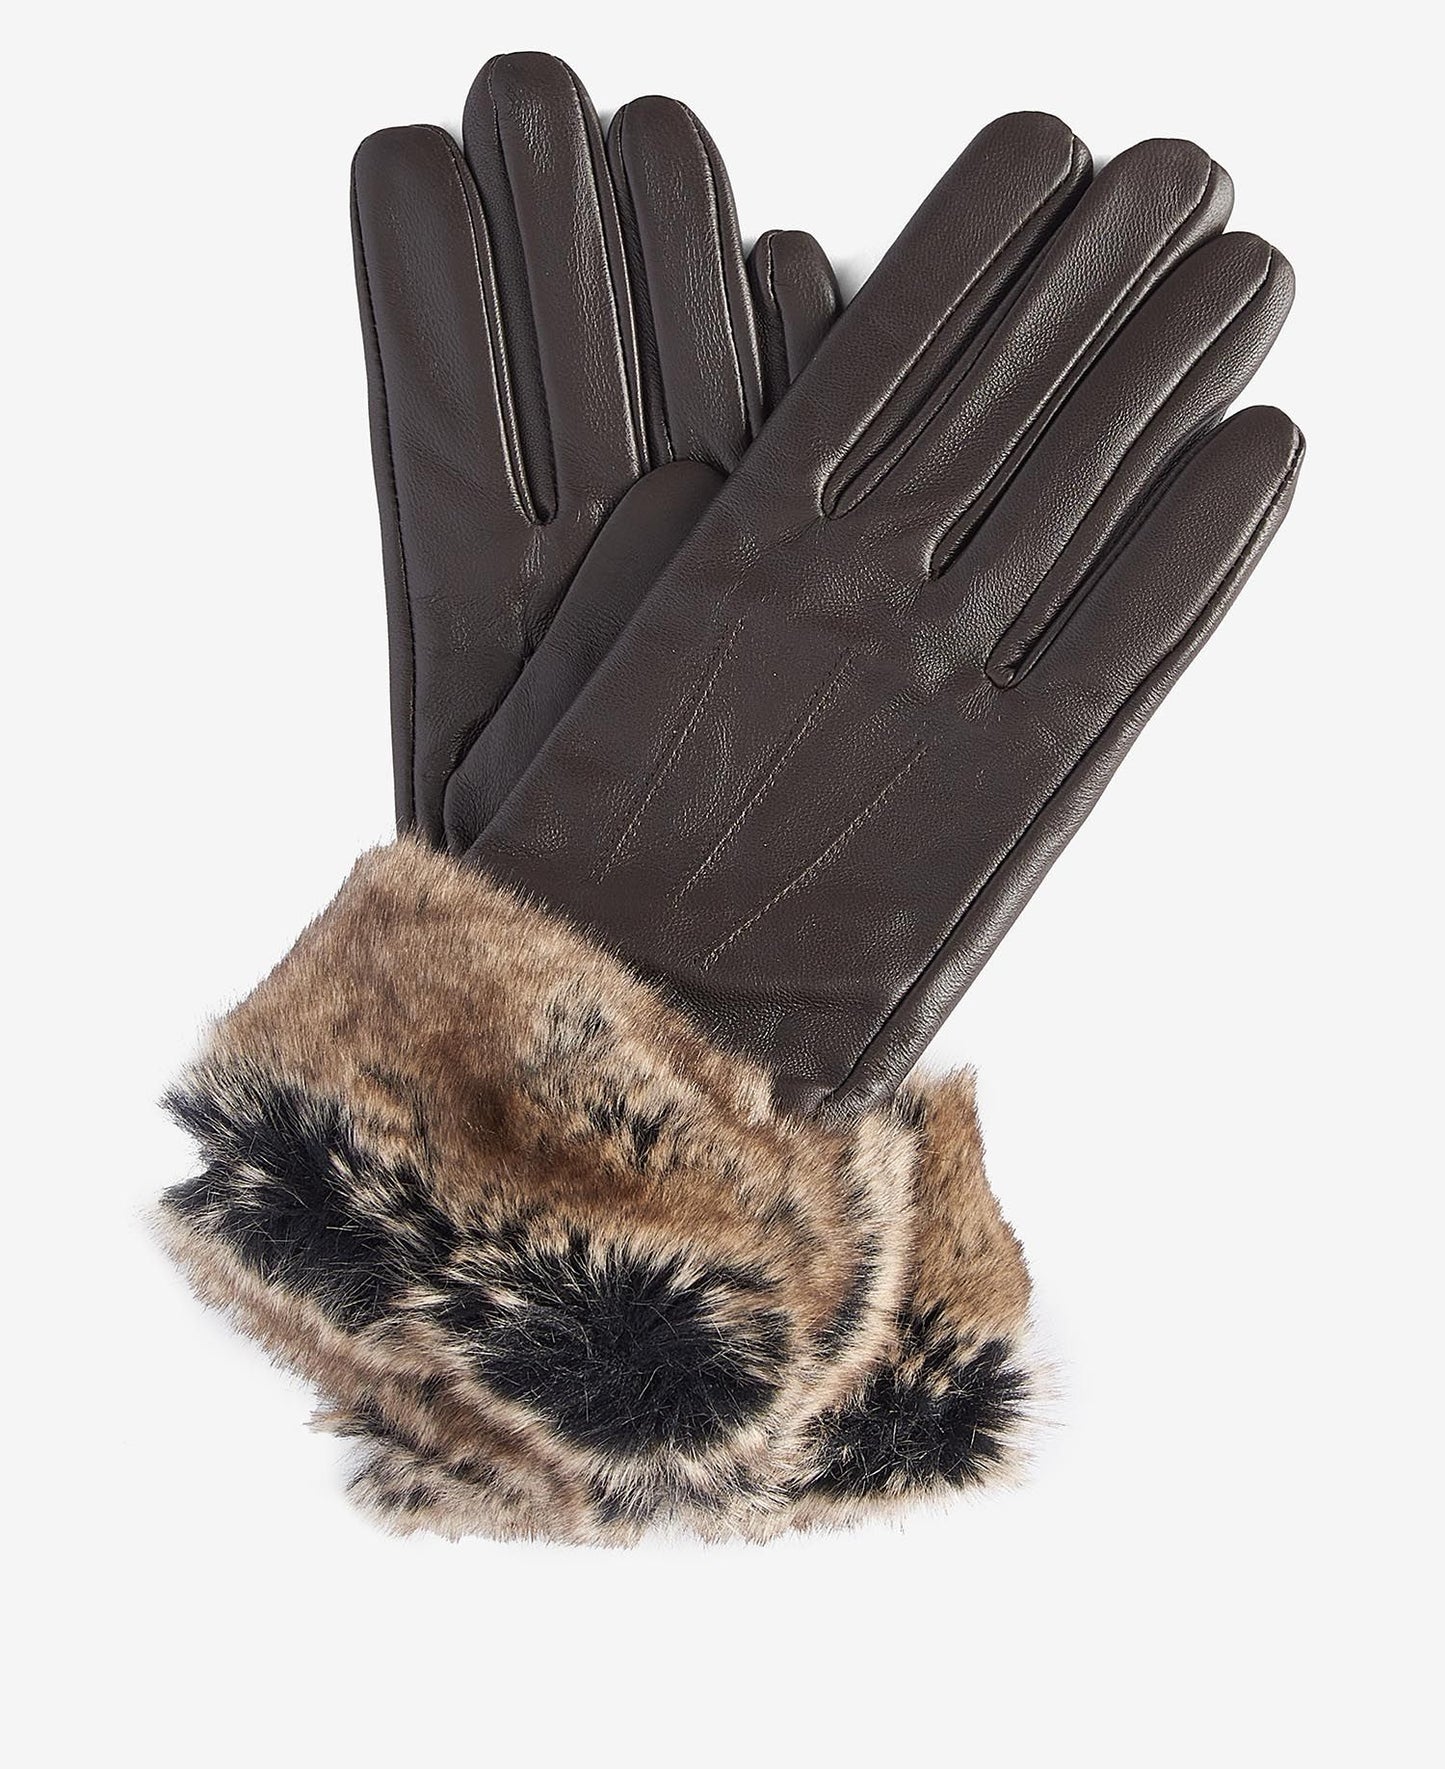 Ladies Barbour gloves